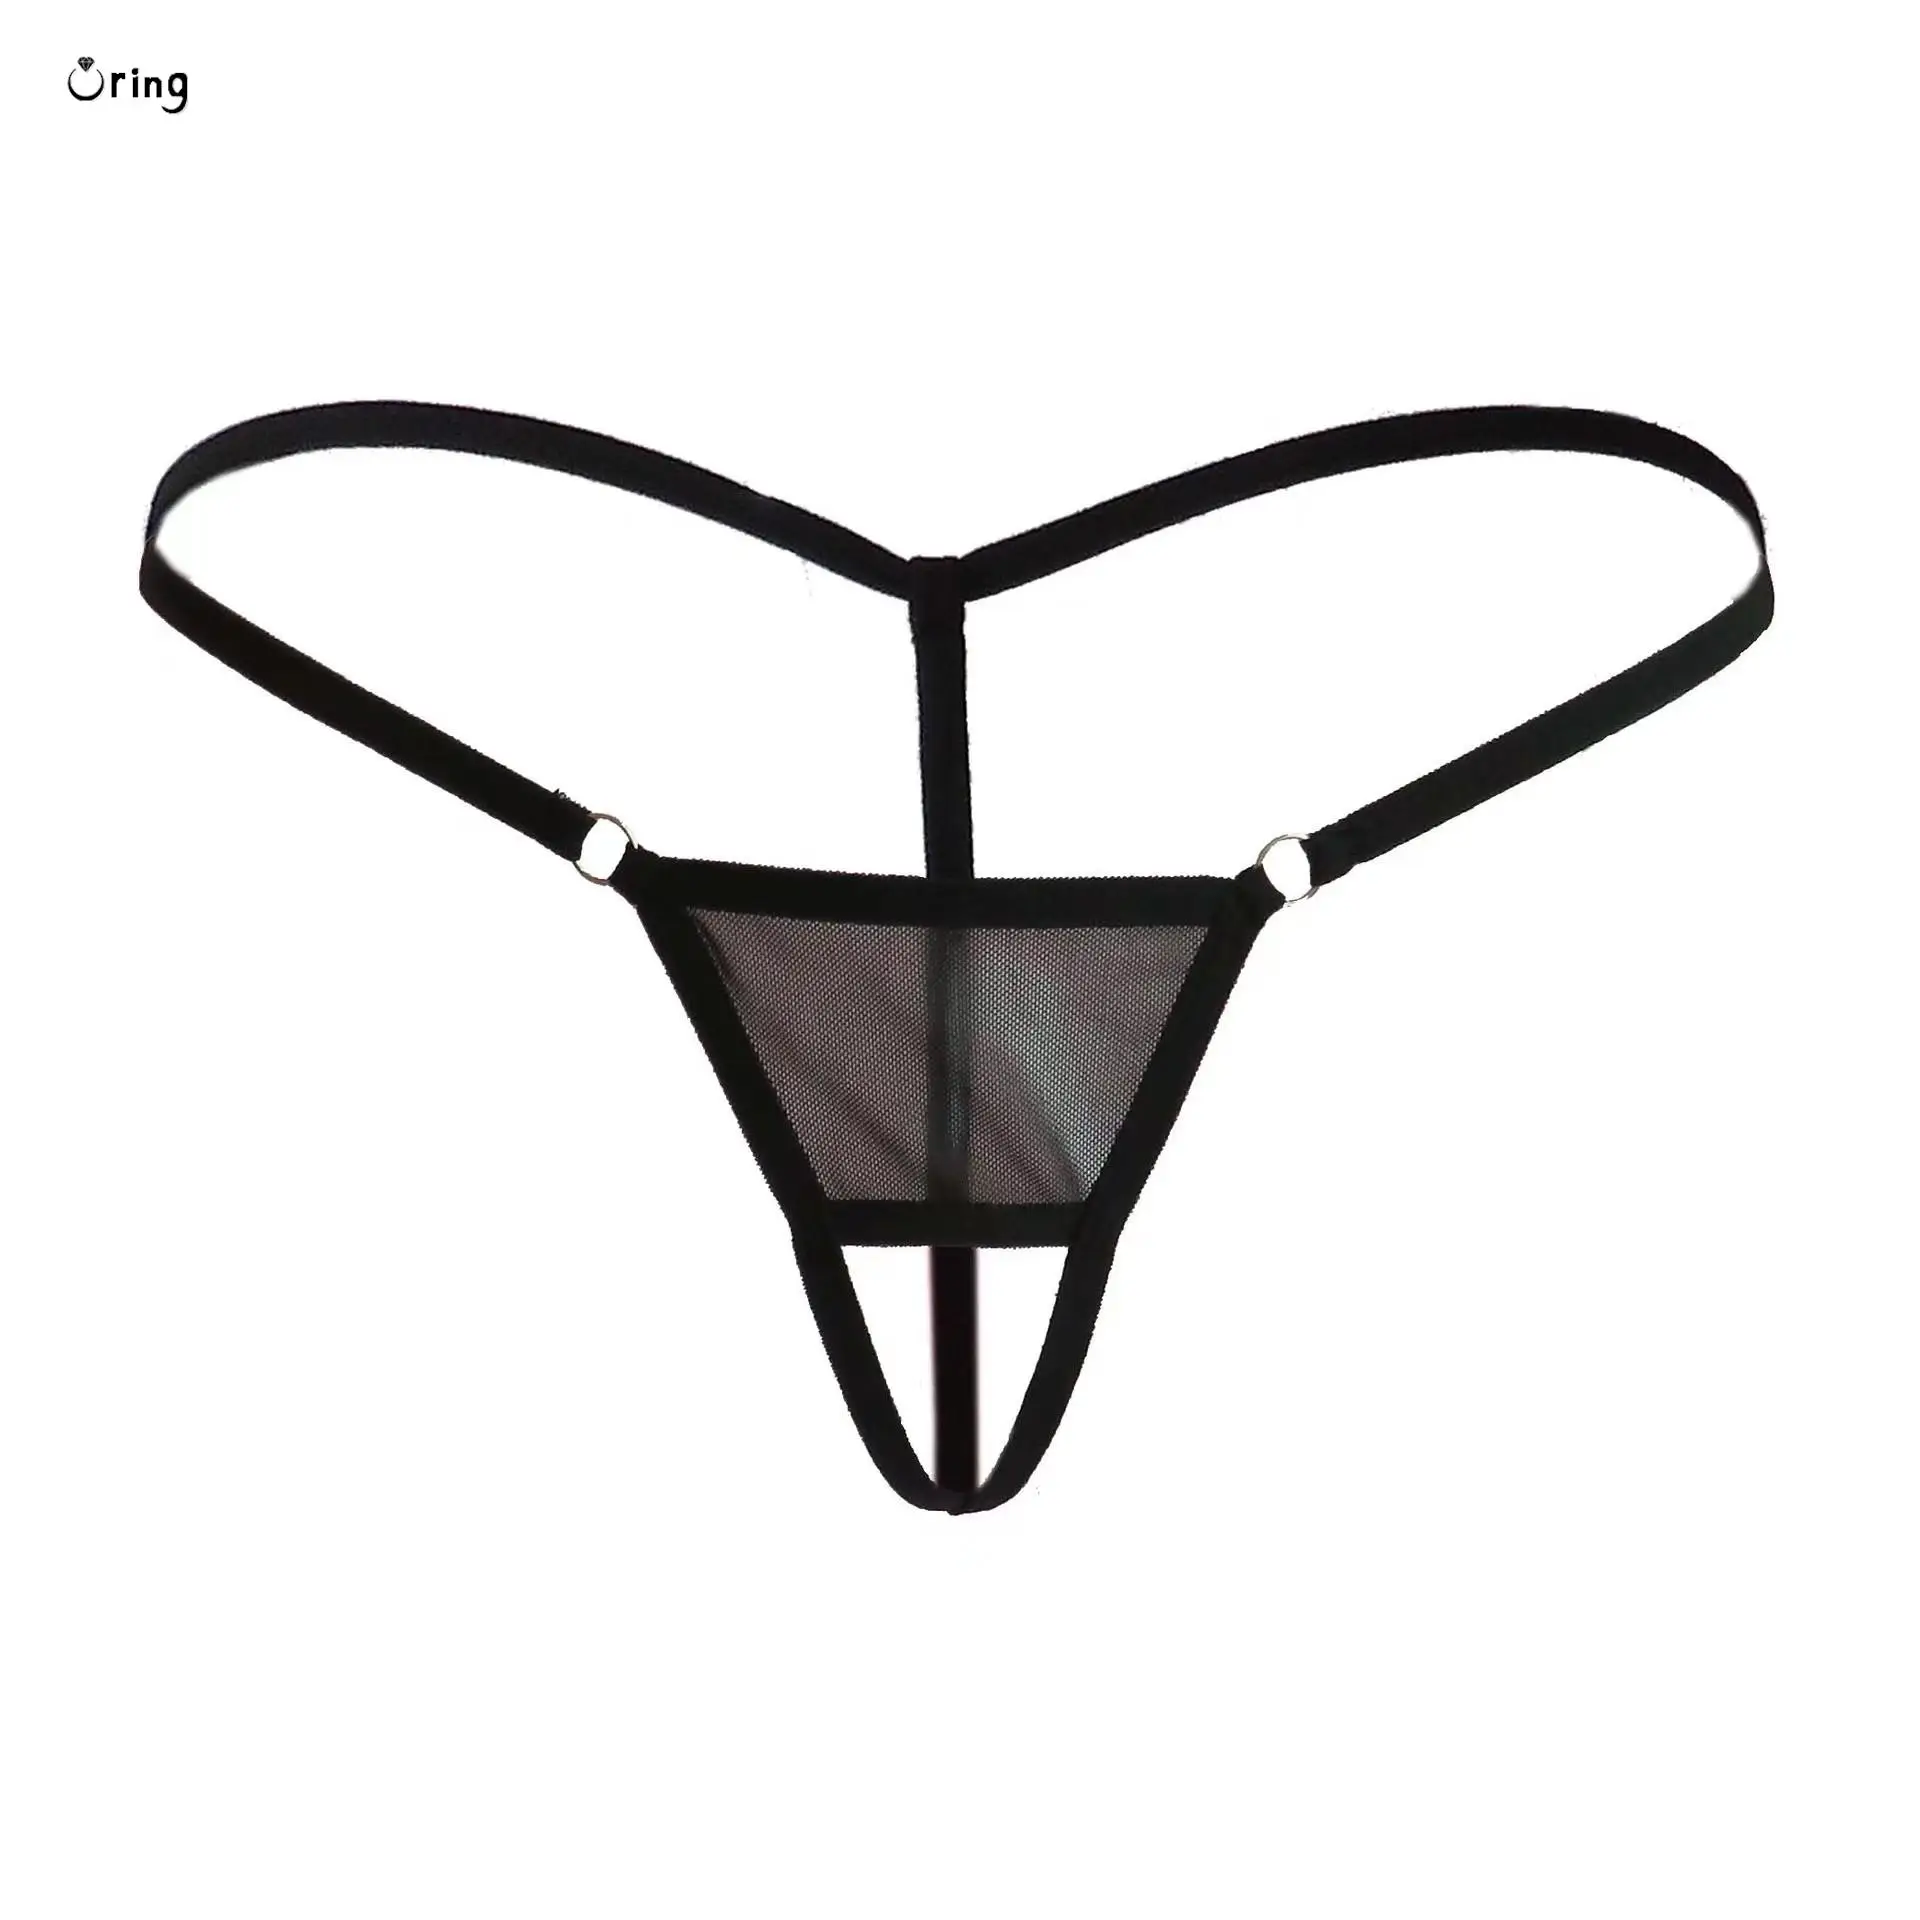 betty jo nash add photo picture of g string underwear